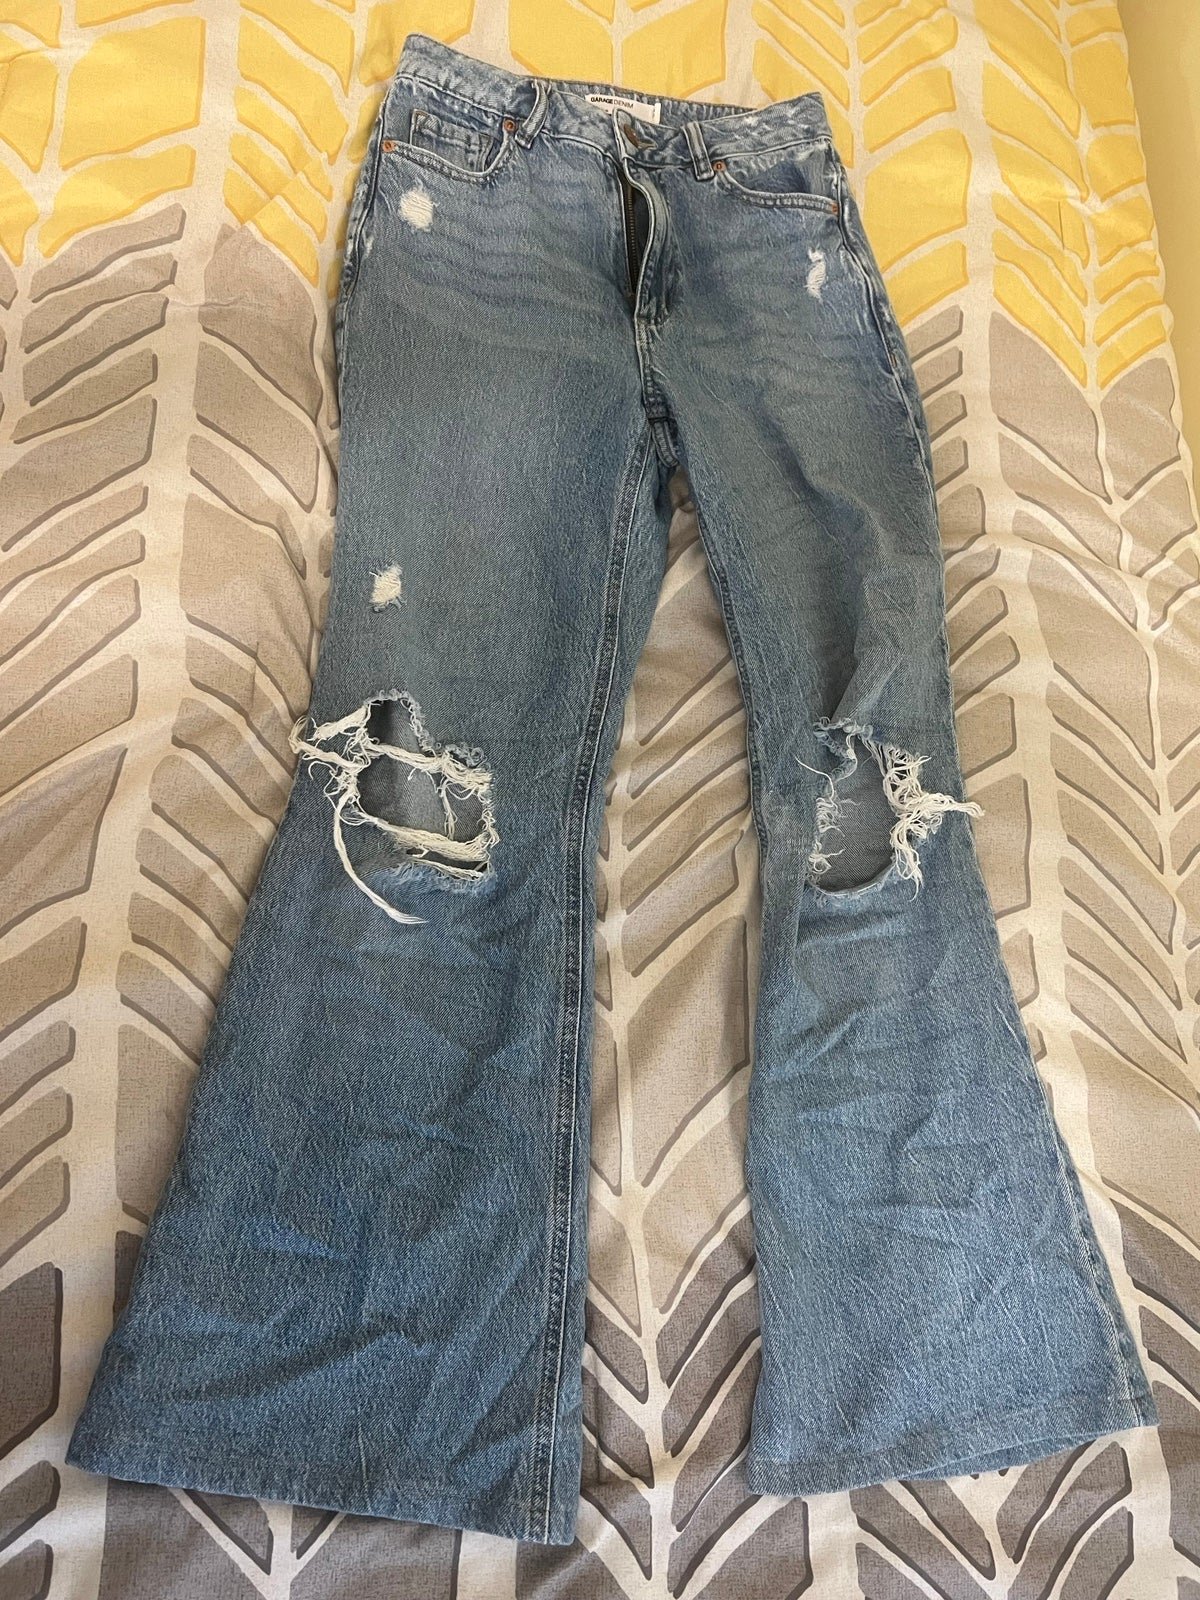 the Lowest price Garage Denim Flare Jeans 26 short FUJ4kghDS hot sale